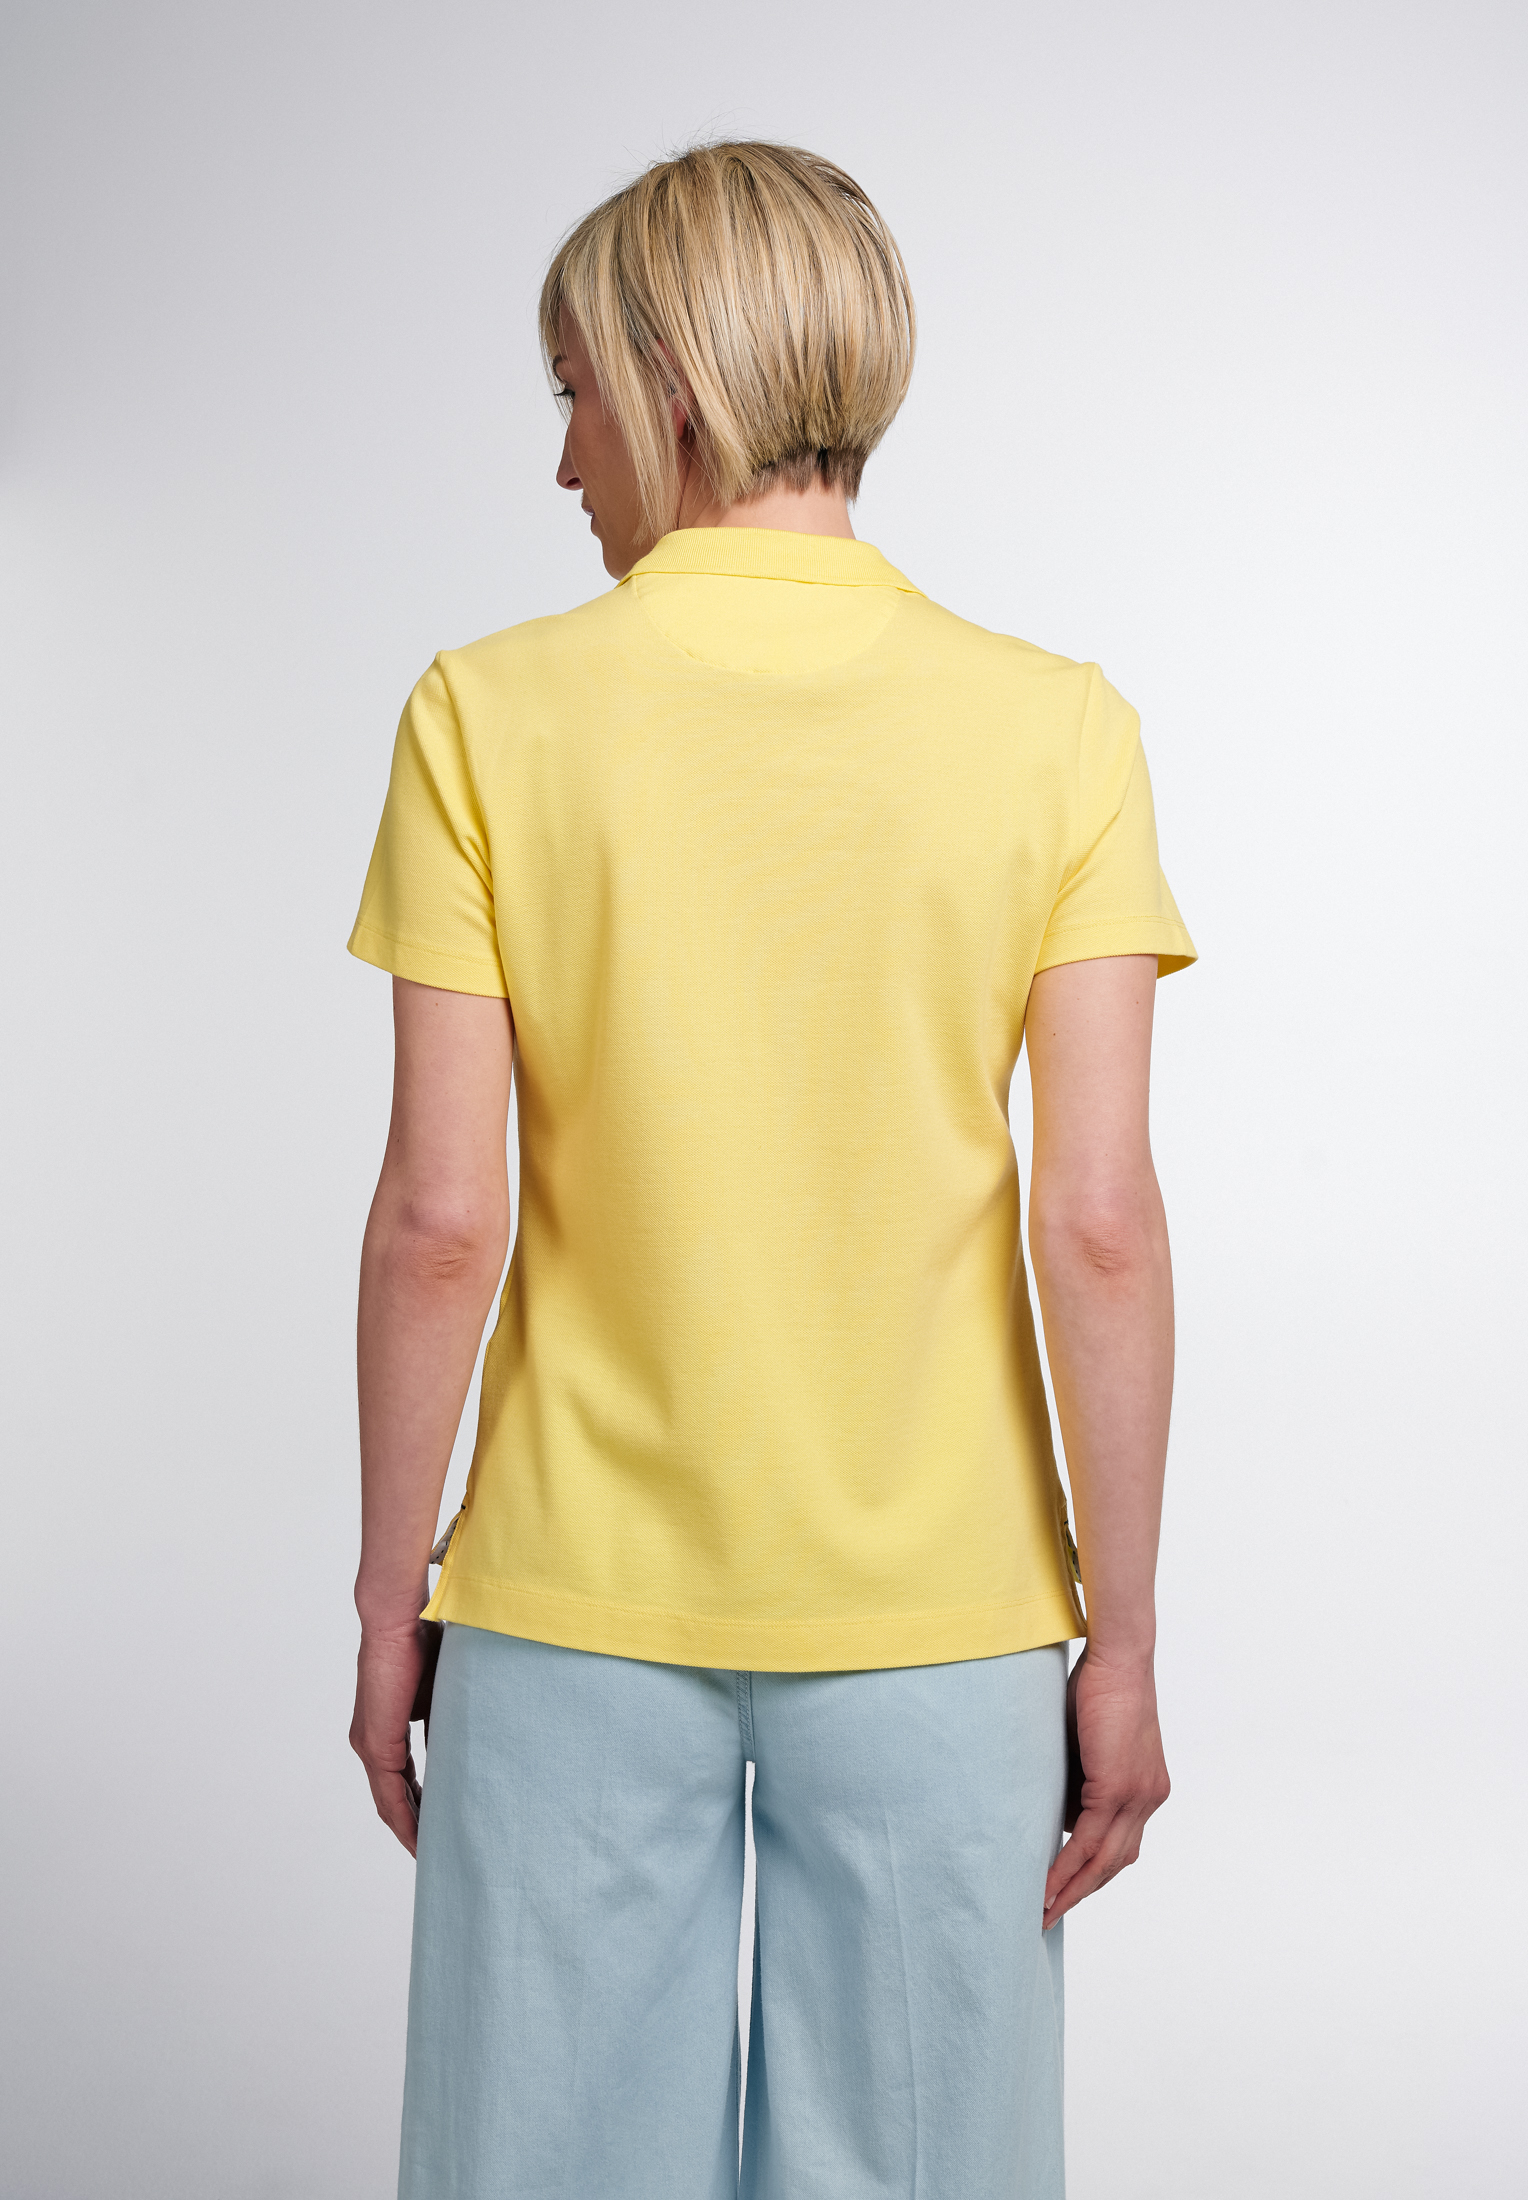 Poloshirt in gelb 7XL | unifarben | | 2SP00006-07-01-7XL-1/2 gelb Kurzarm 